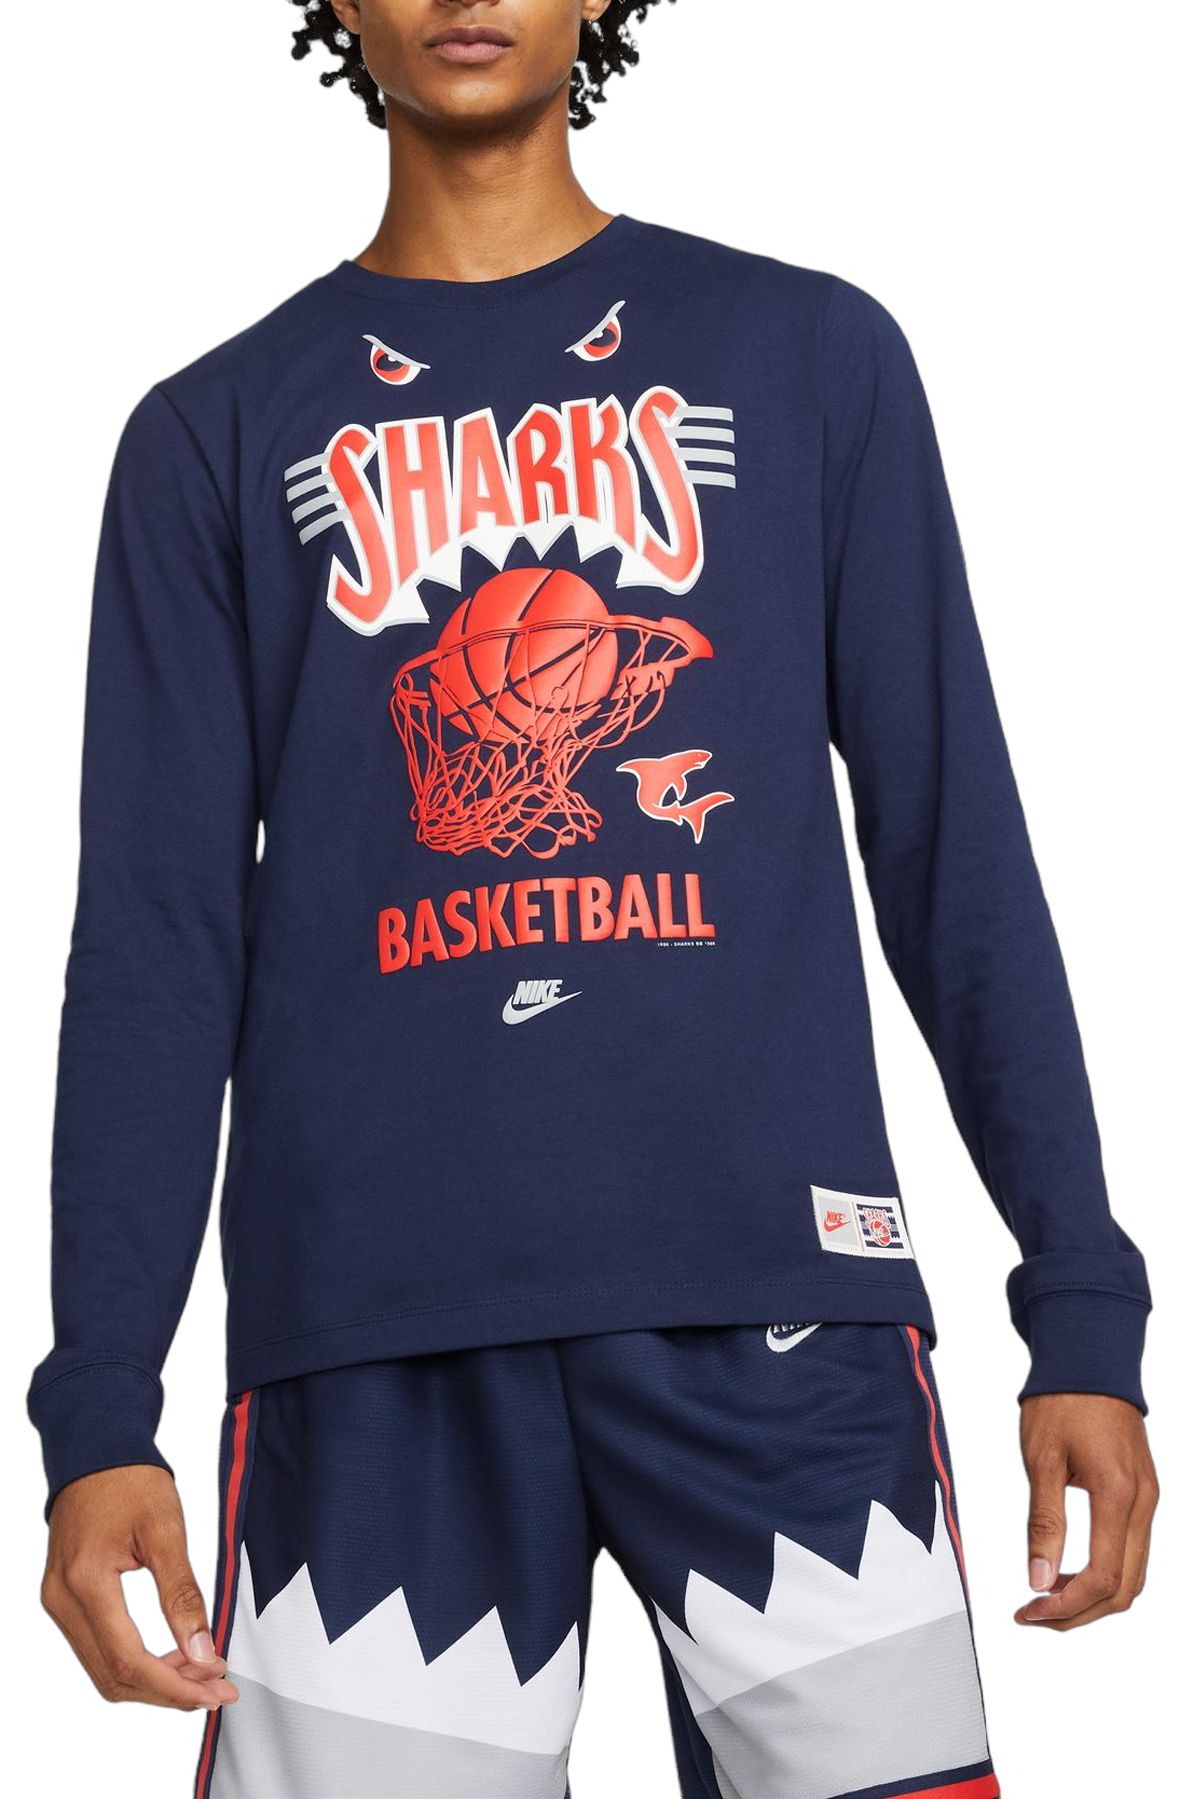 Nike Basketball NBA team 31 graphic back print t-shirt in blue